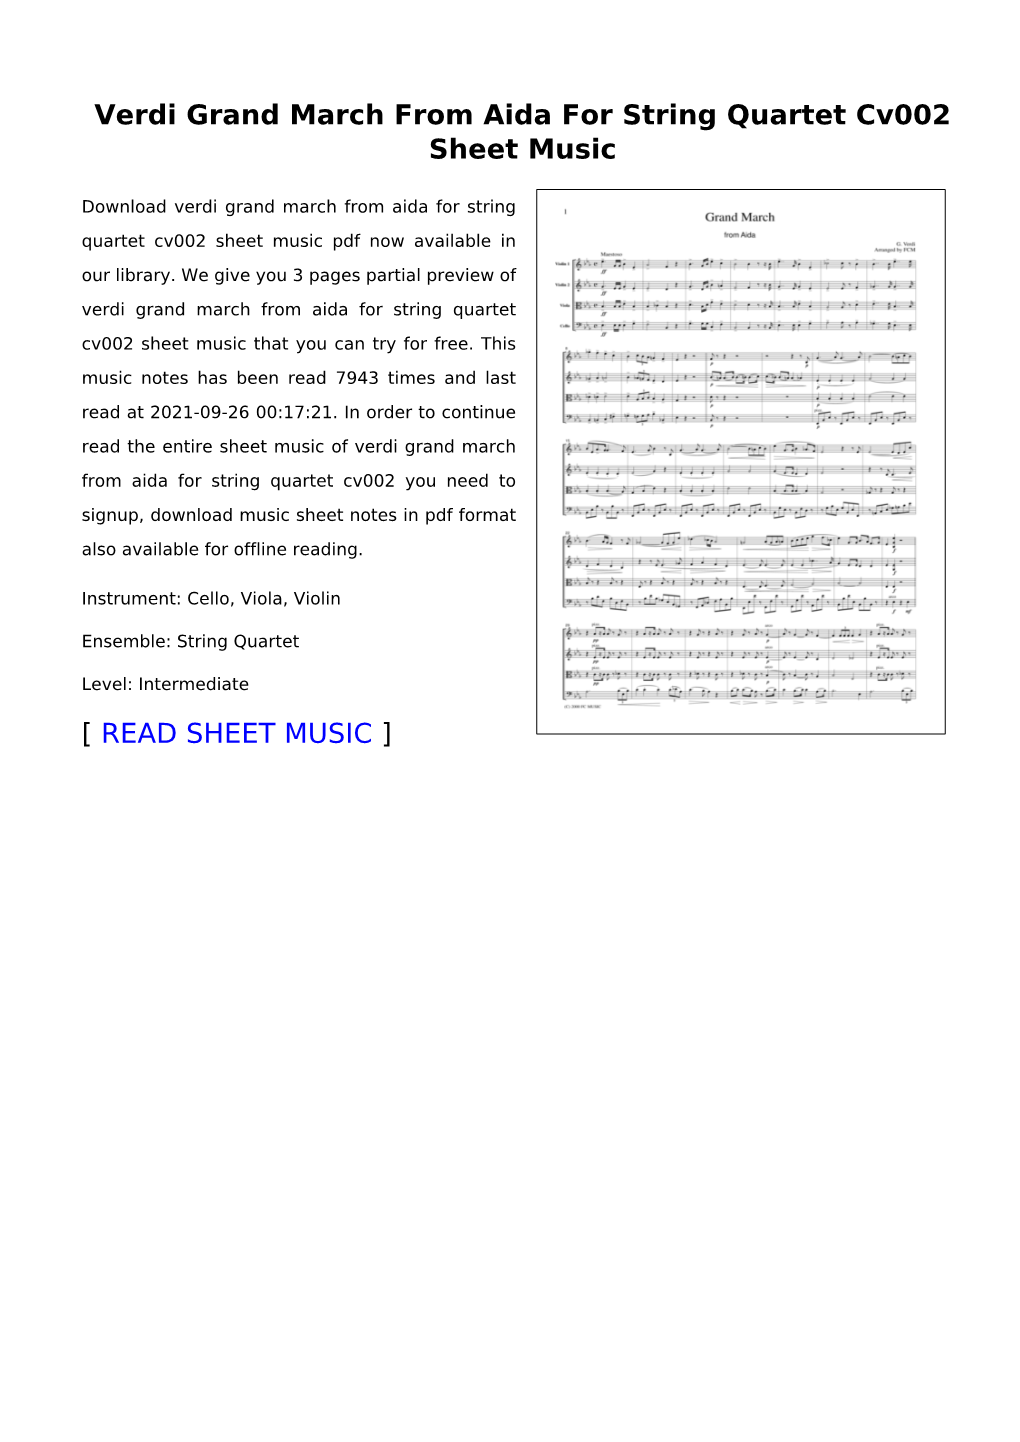 Verdi Grand March from Aida for String Quartet Cv002 Sheet Music